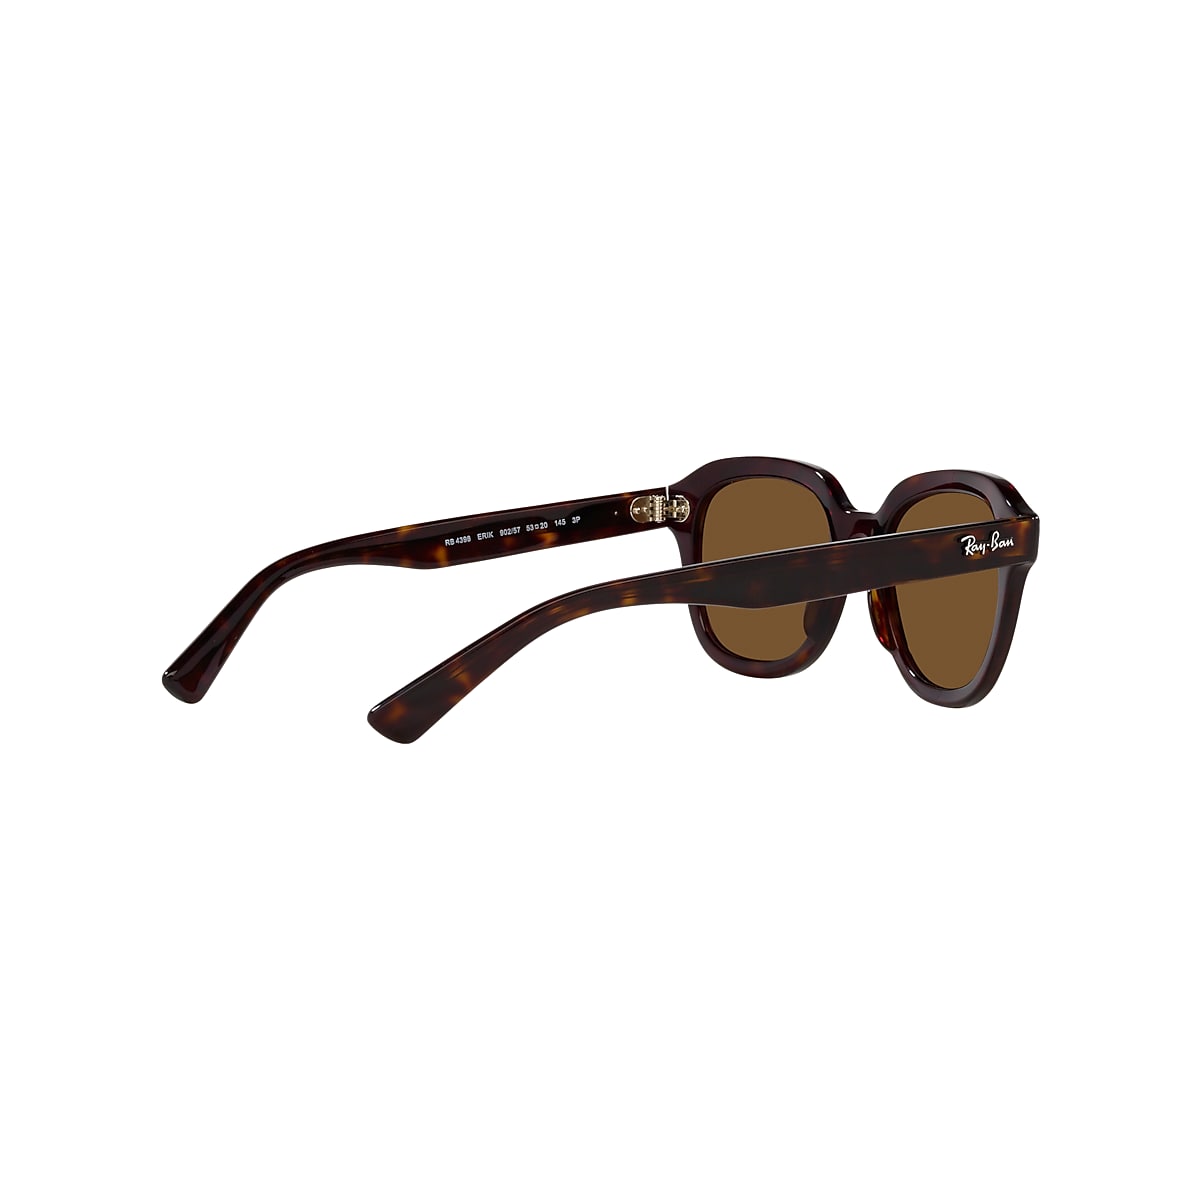 ERIK Sunglasses in Havana and Brown - RB4398 | Ray-Ban® US